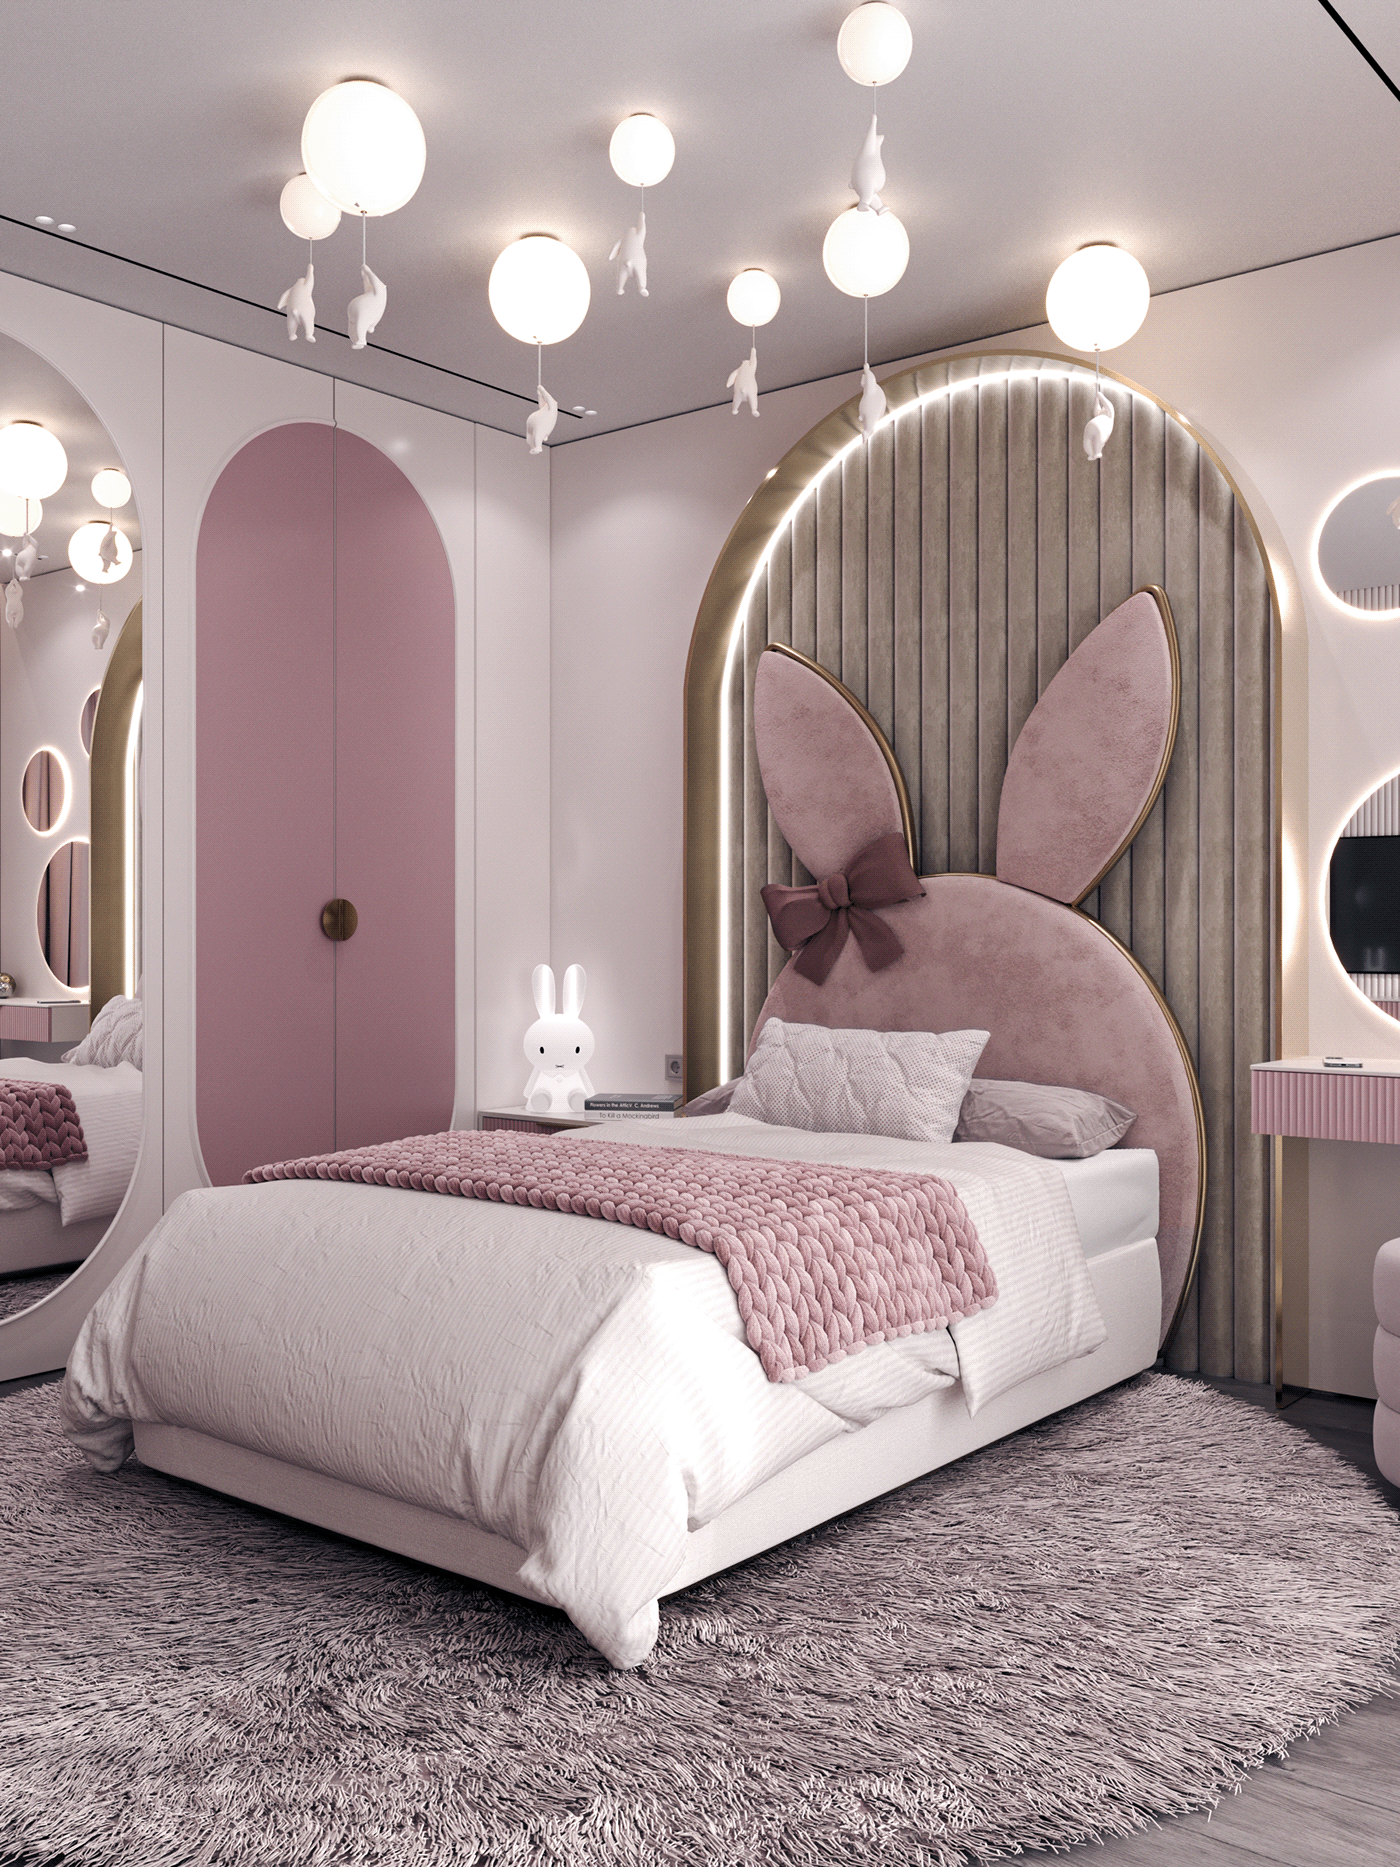 interior design  Interior bedroom bedroom design interiordesign visualization 3D Render architecture modern